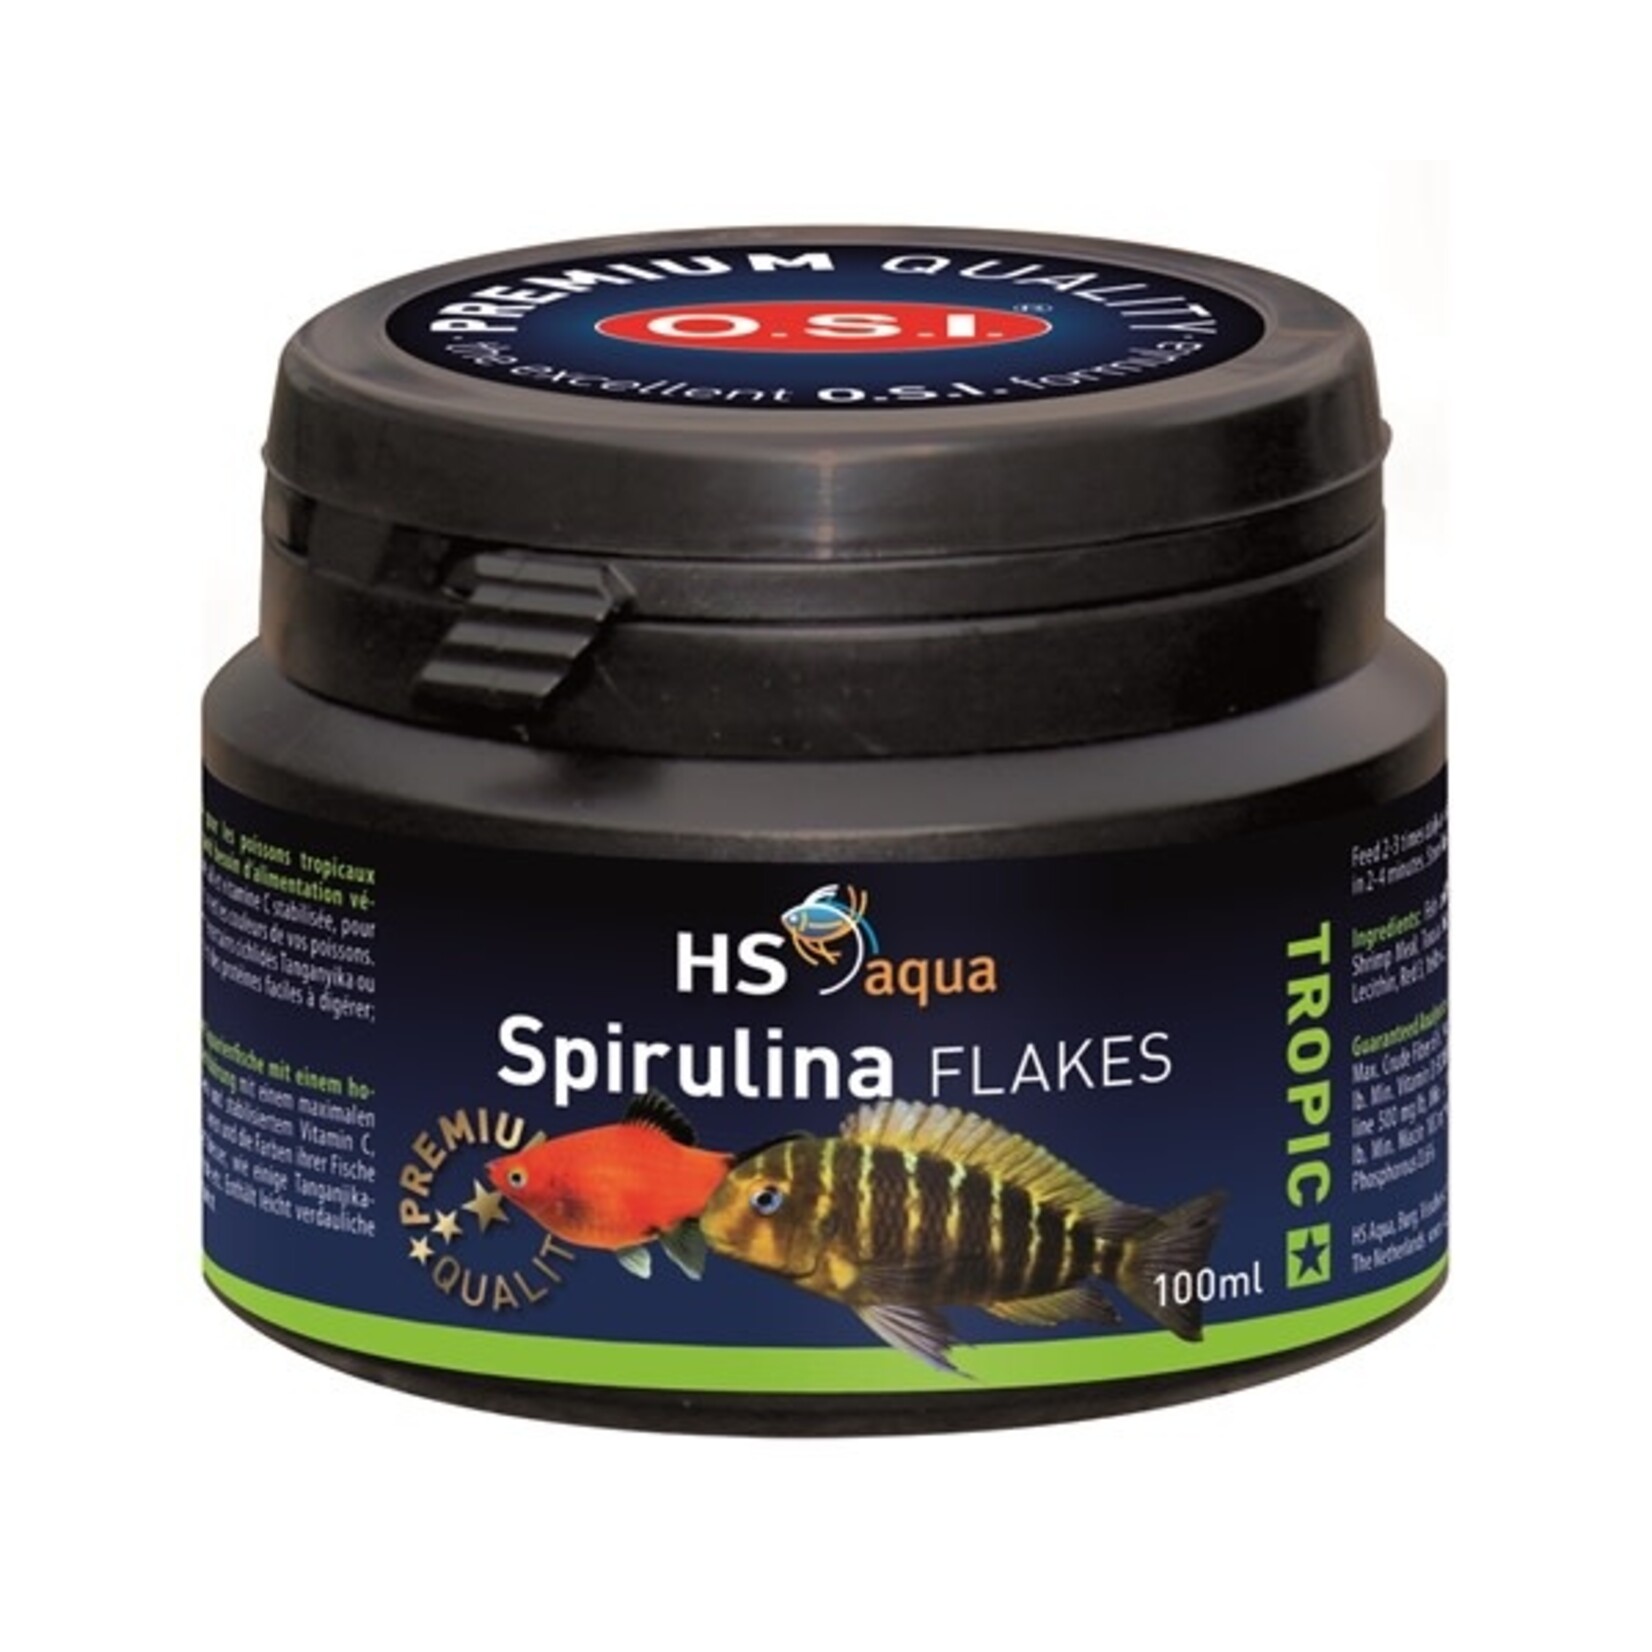 HS Aqua Spirulina flakes 100 ml